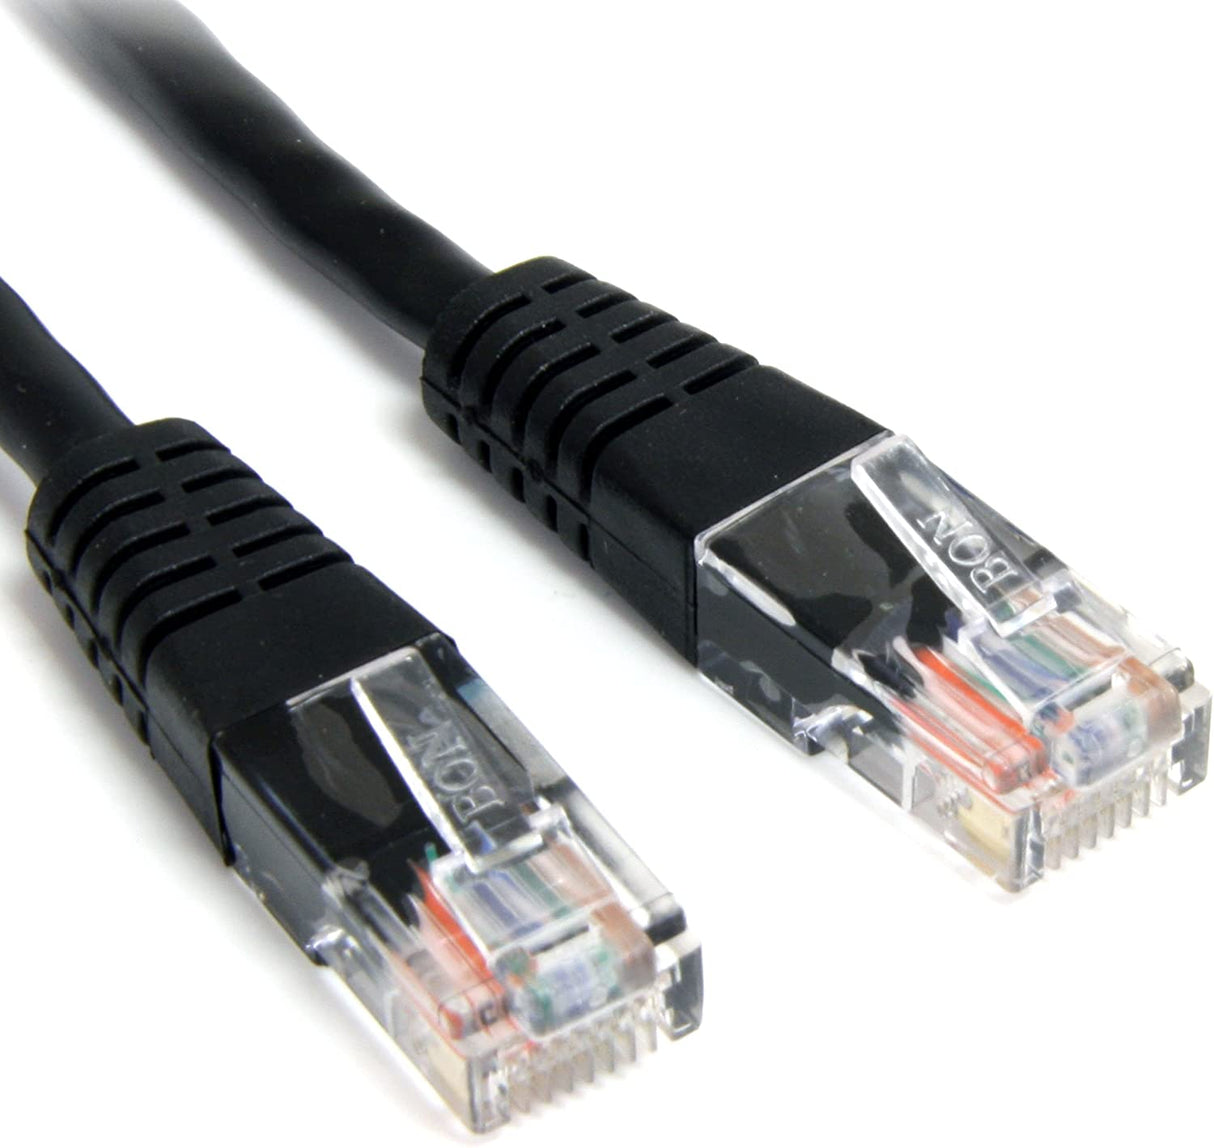 StarTech.com Cat5e Ethernet Cable - 2 ft - Black - Patch Cable - Molded Cat5e Cable - Short Network Cable - Ethernet Cord - Cat 5e Cable - 2ft (M45PATCH2BK) 2 ft / 0.5m Black